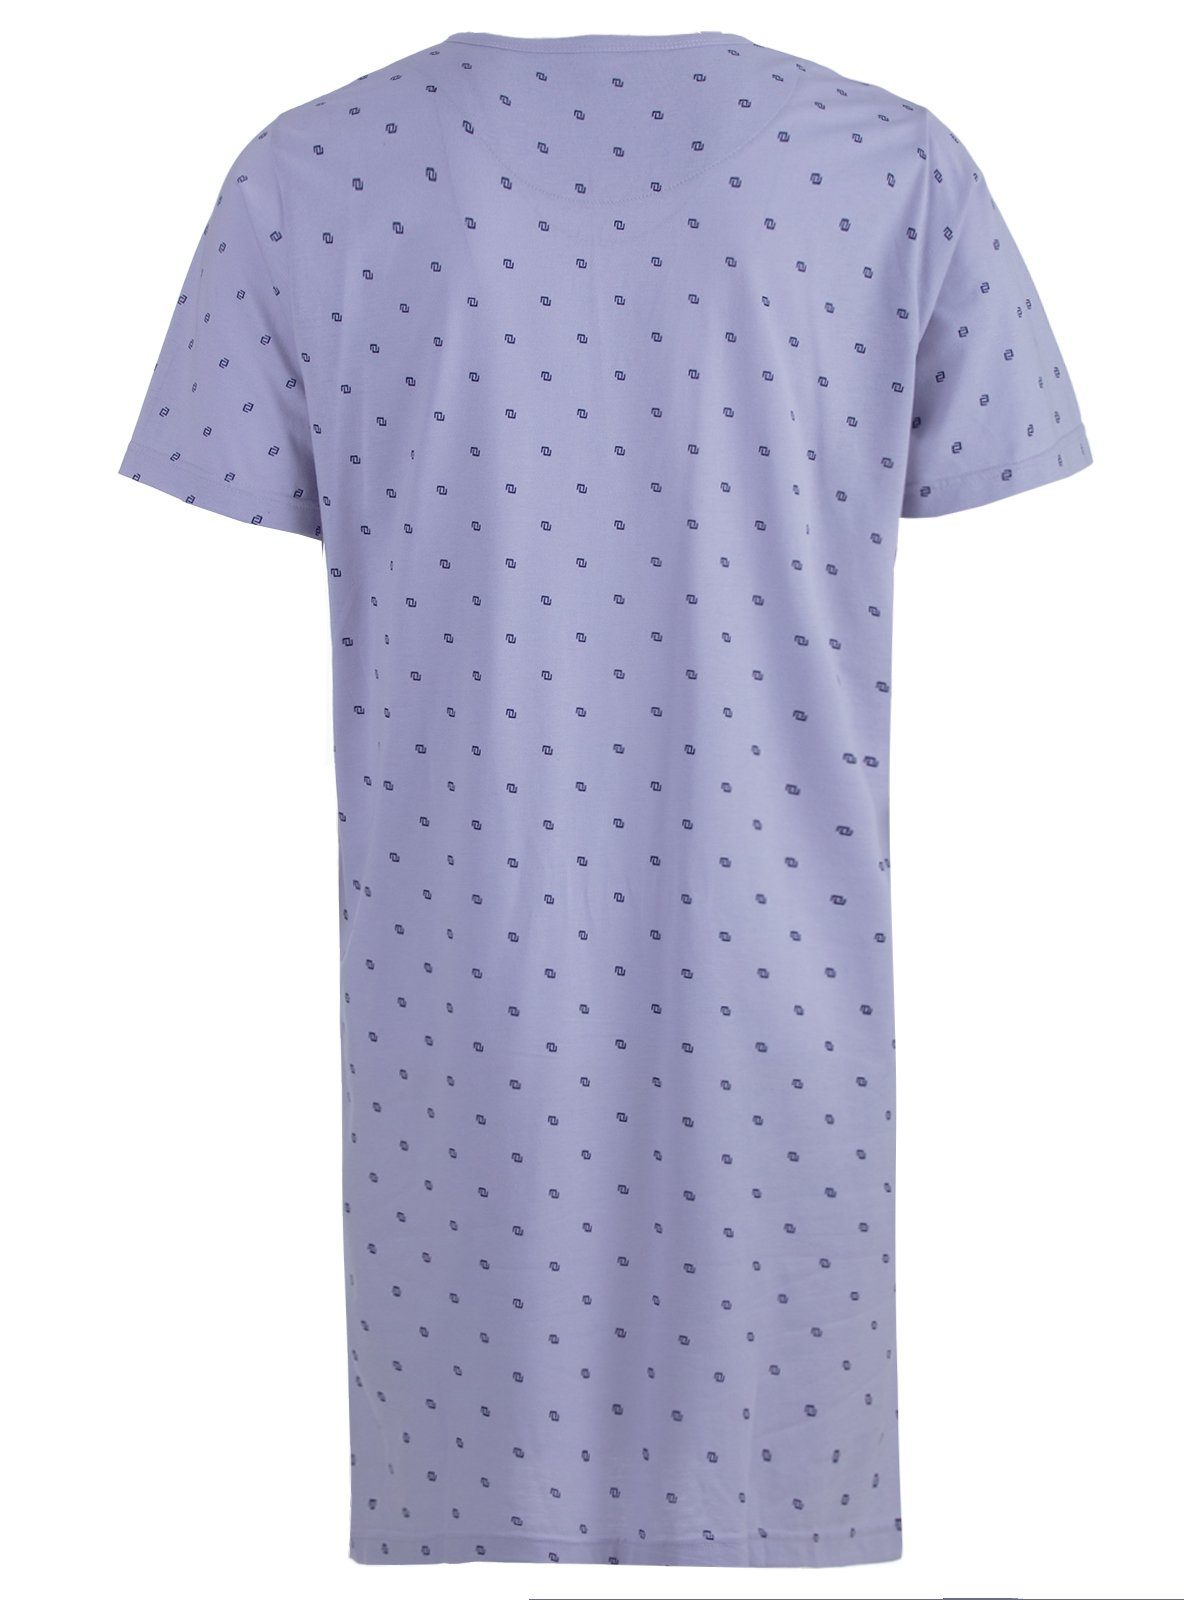 Henry Terre Nachthemd Nachthemd grau - Kurzarm Grafik Logo